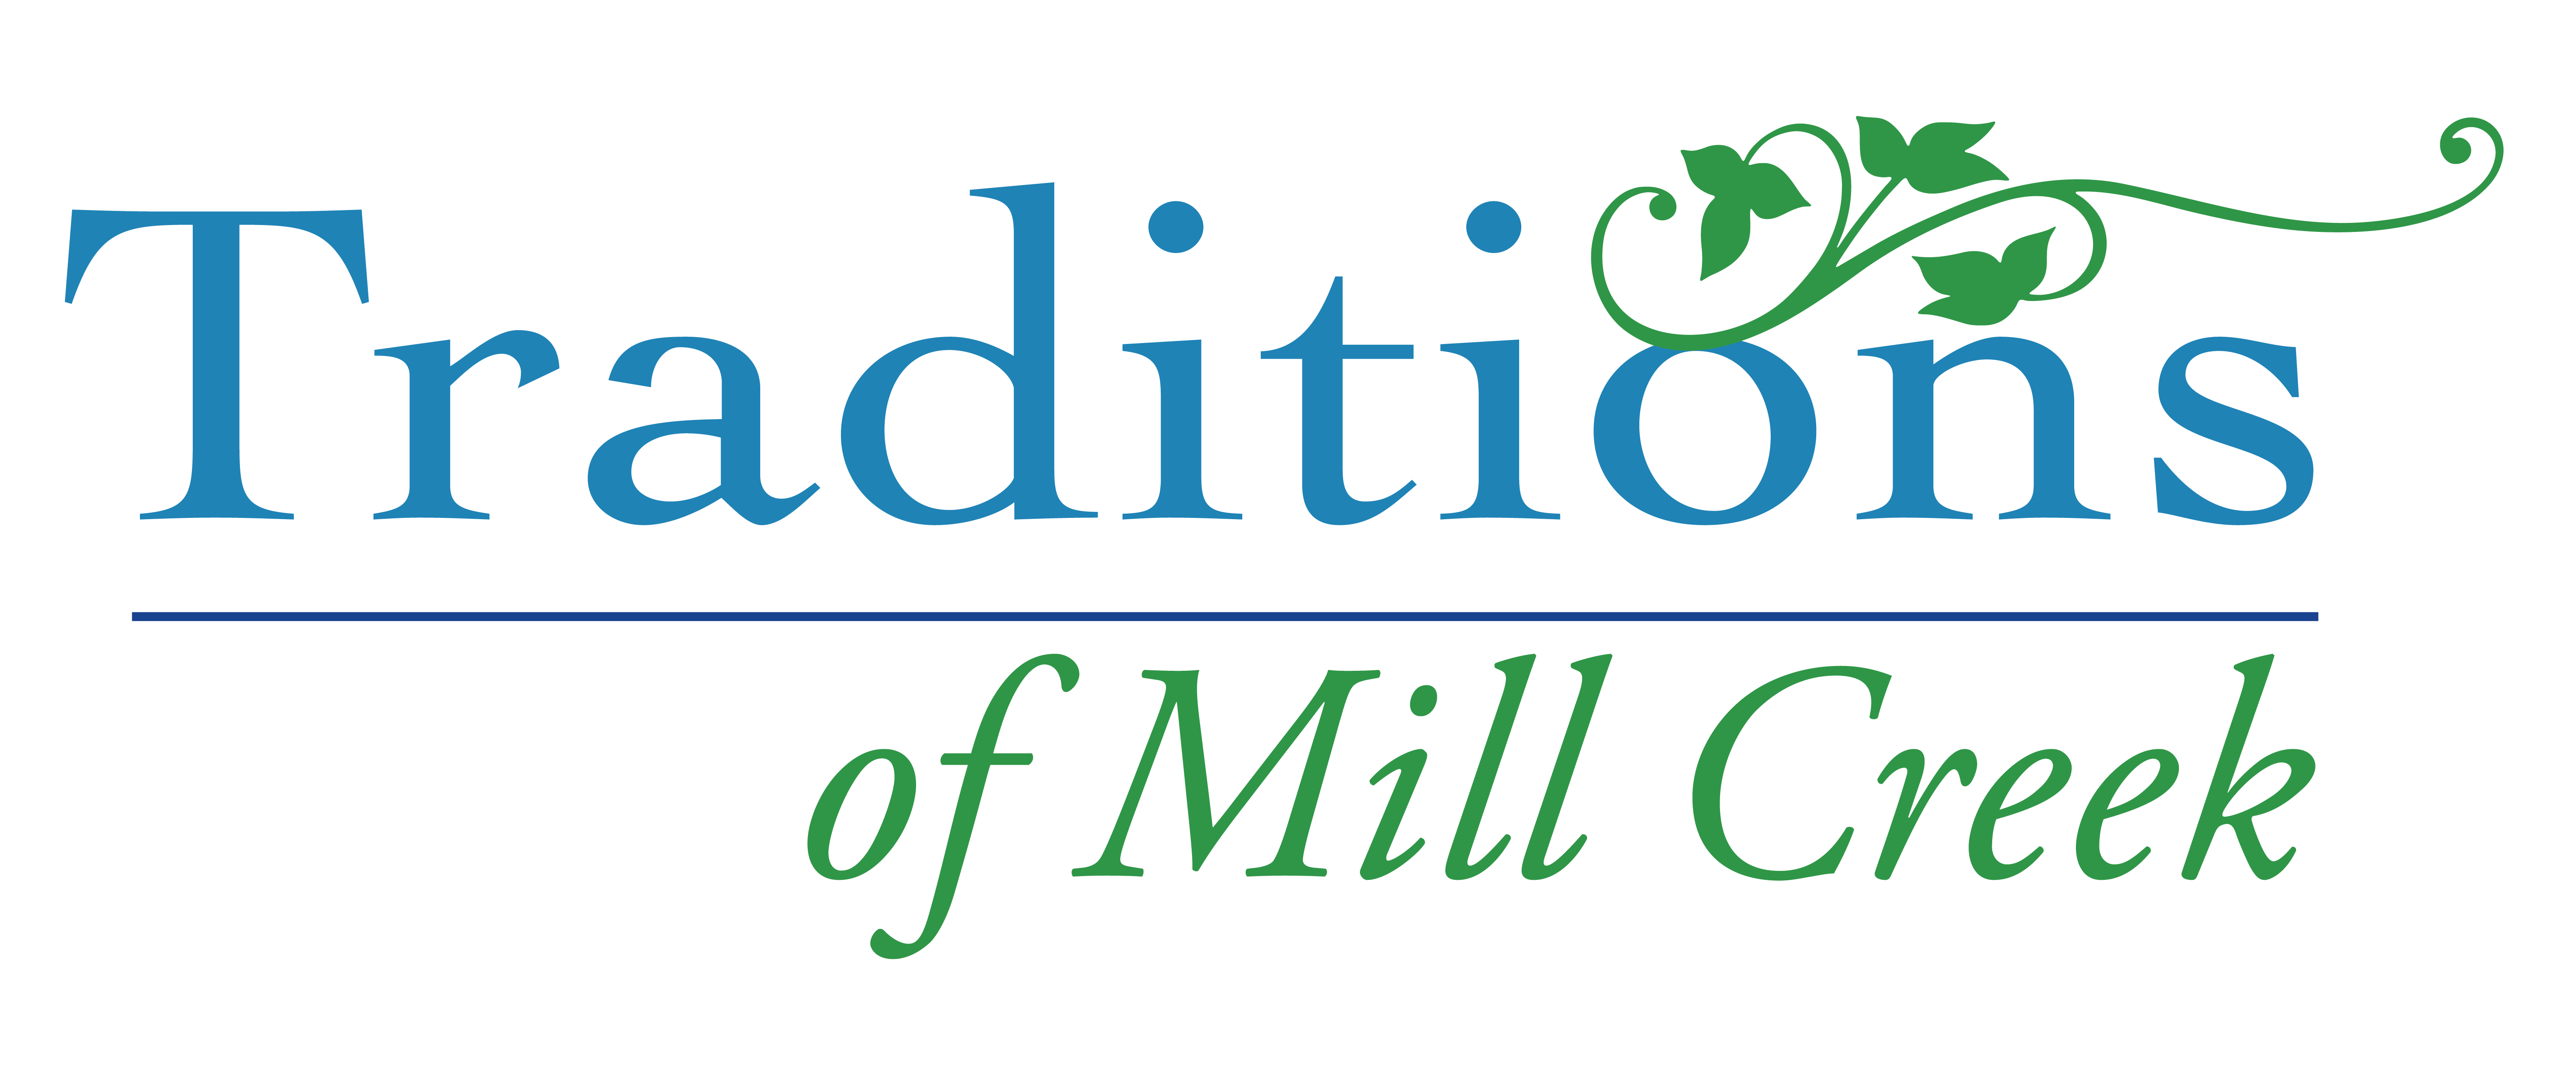 Mill creek logo